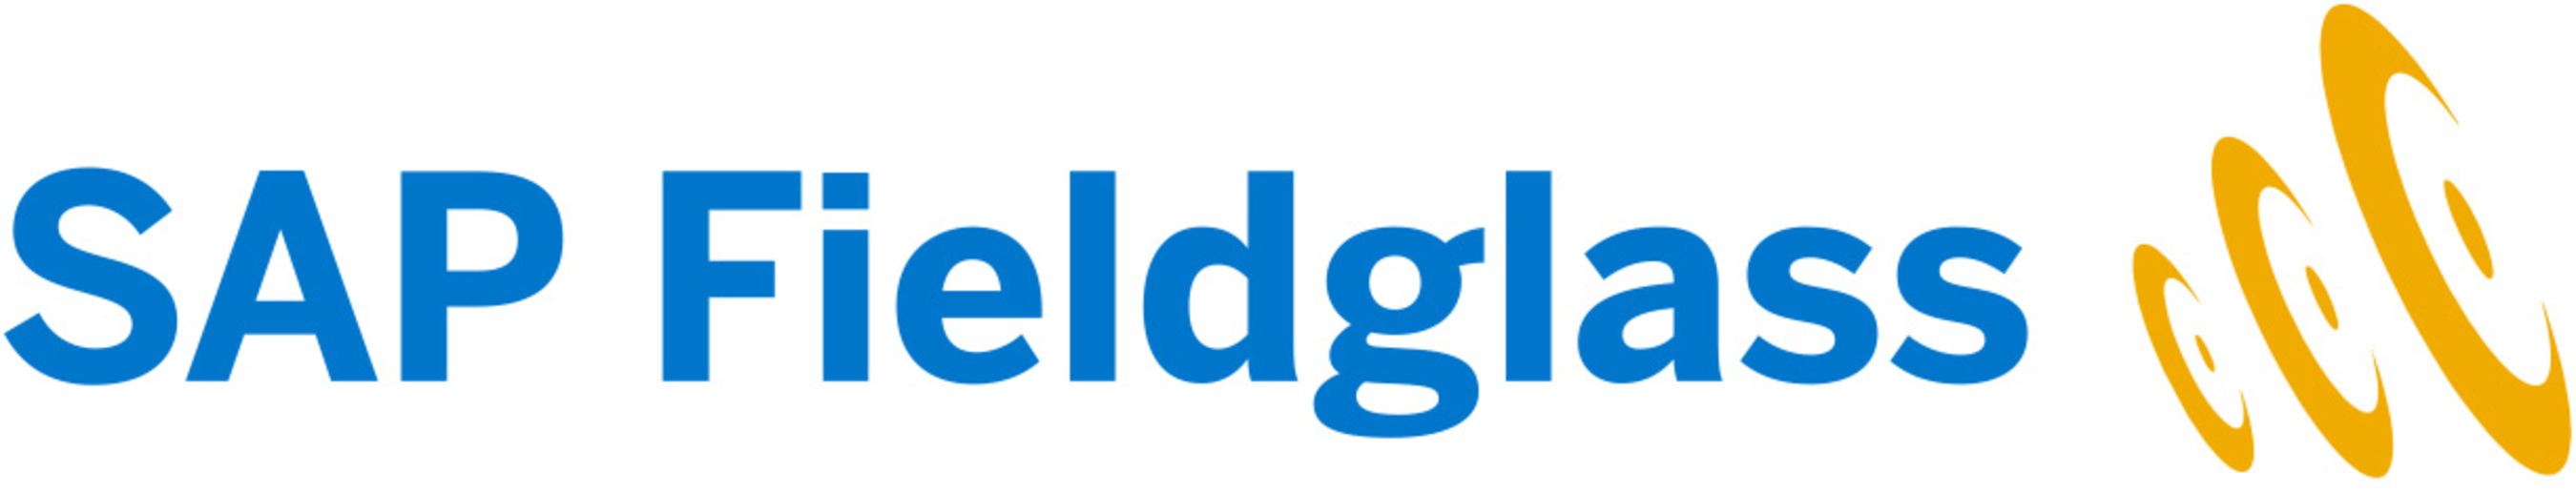 SAP Fieldglass, Inc. Logo. (PRNewsFoto/Fieldglass, Inc.) (PRNewsFoto/)